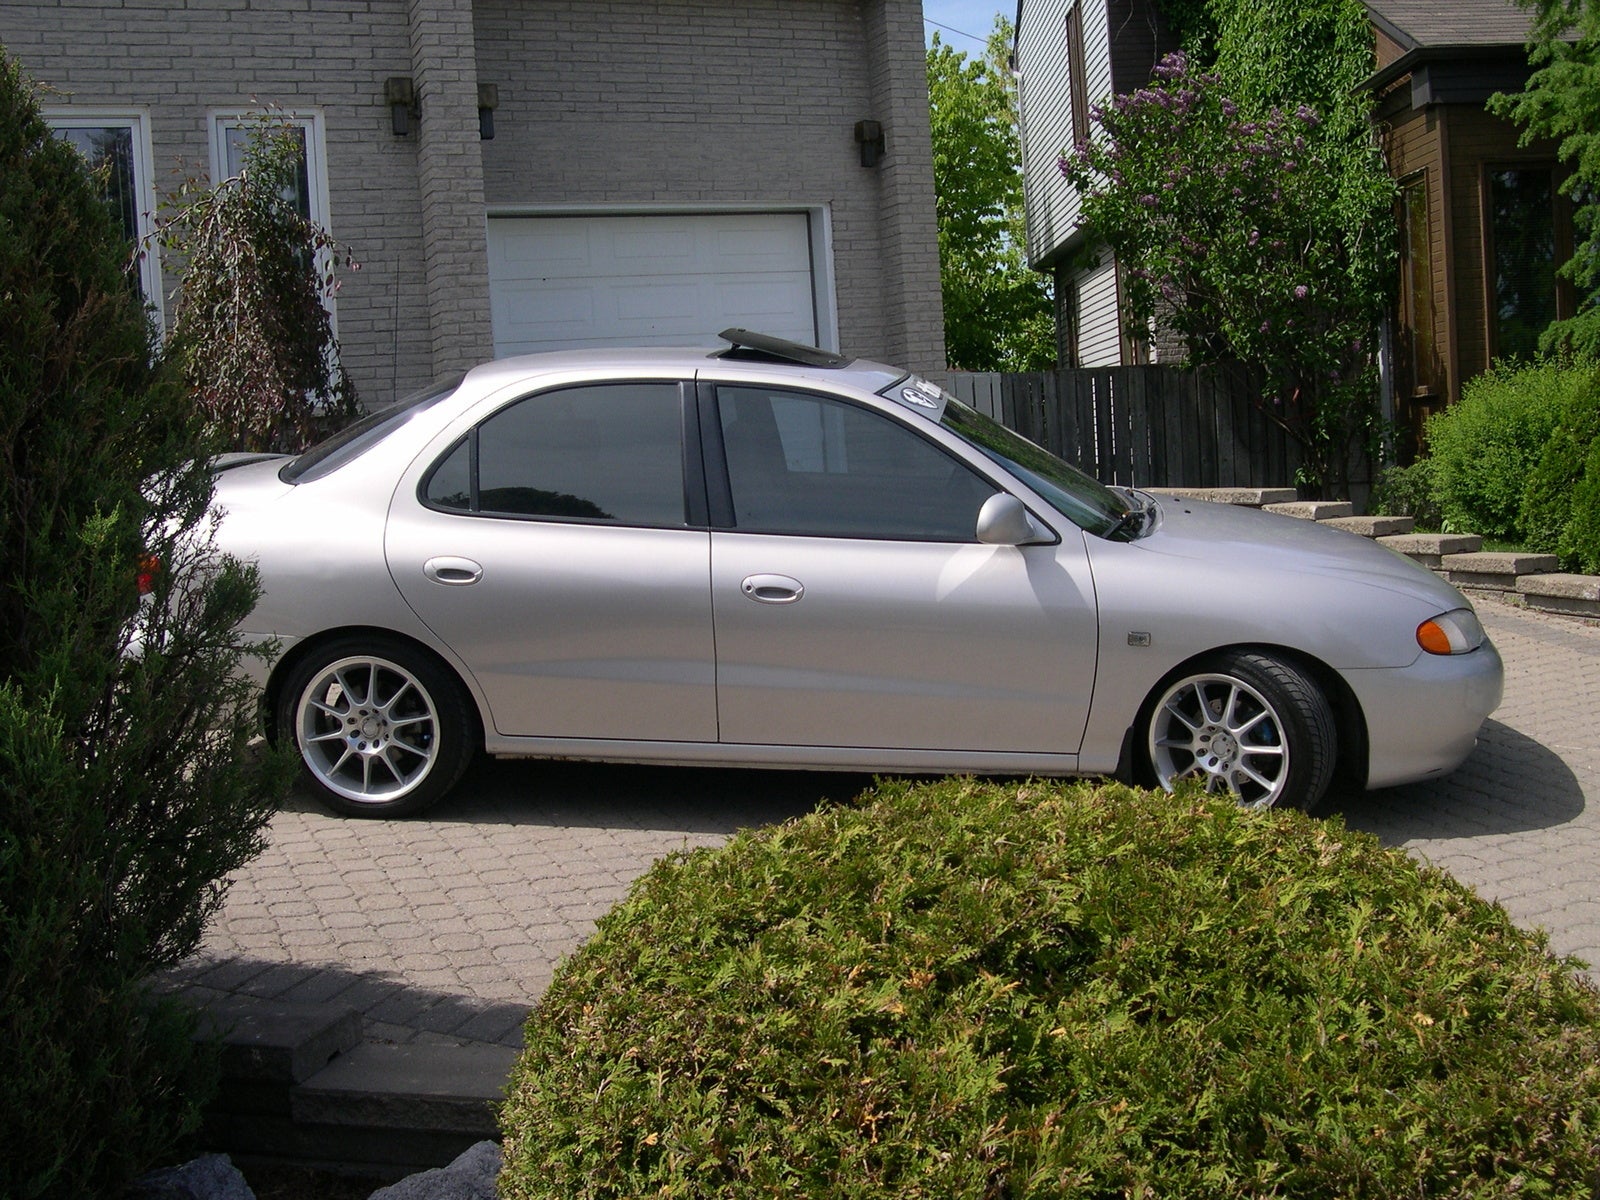 1998 Hyundai Elantra Test Drive Review CarGurus